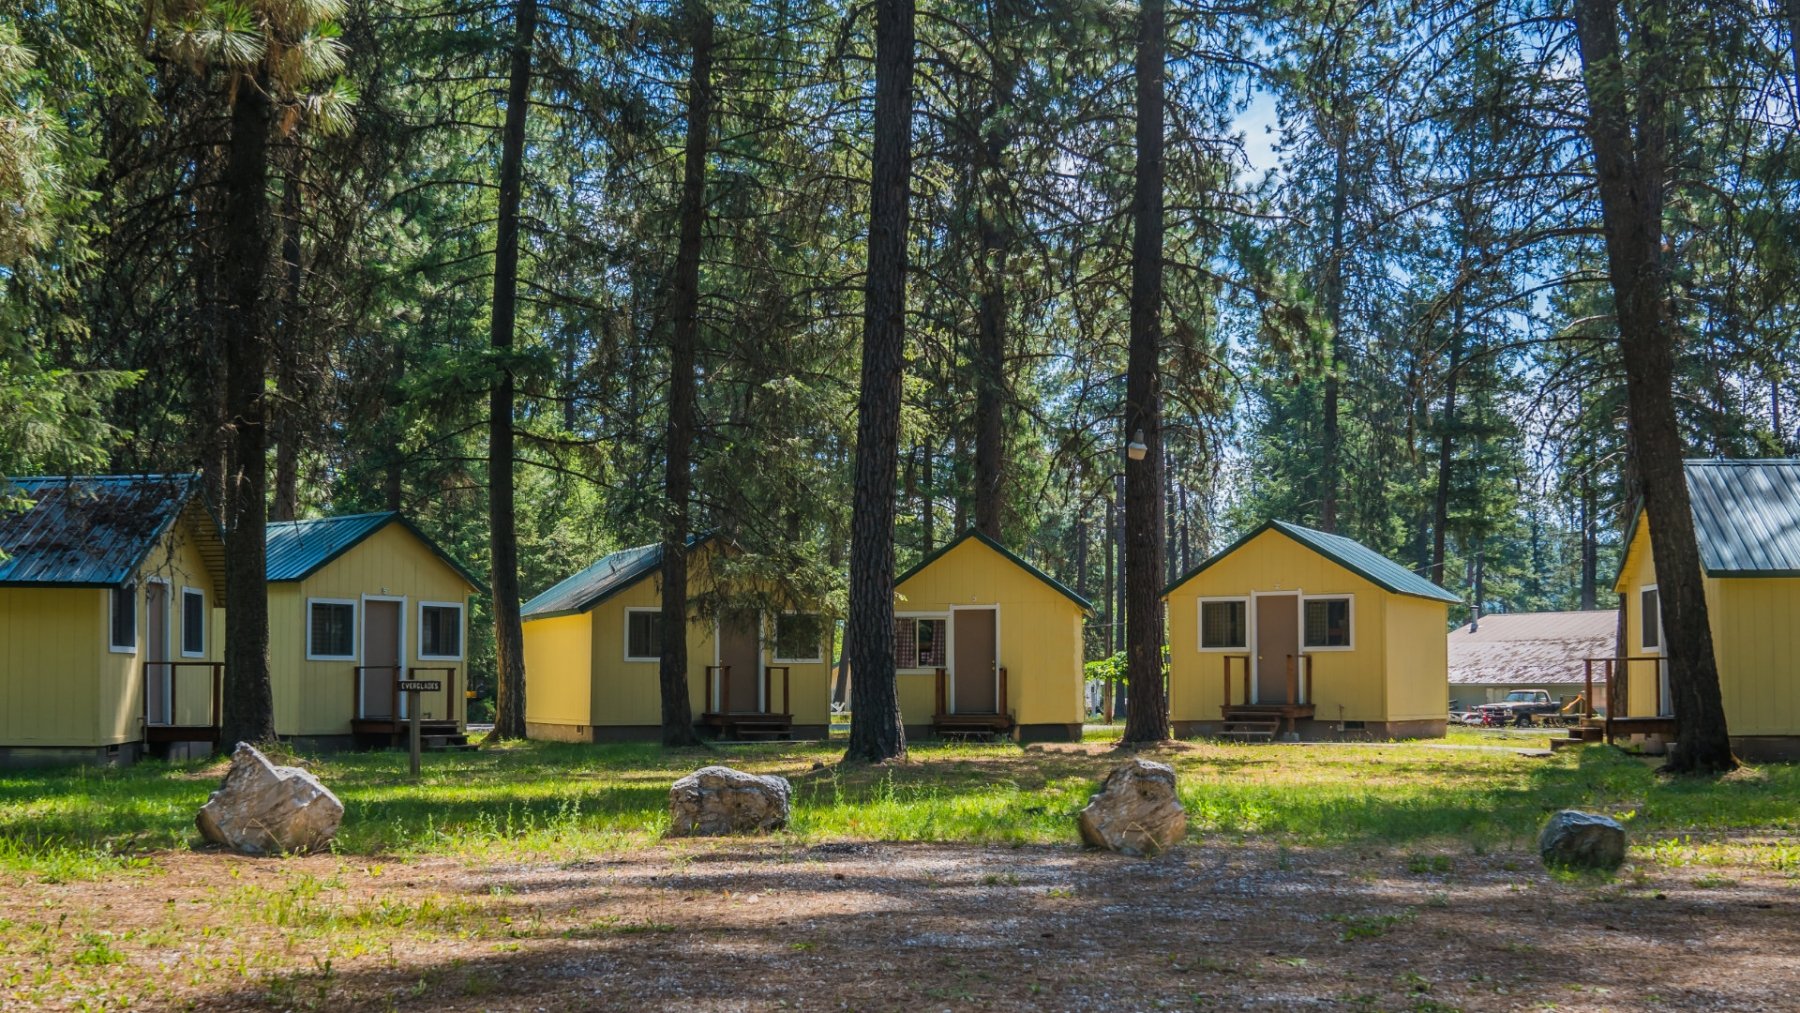 Pinelow camp yellow cabins.jpeg